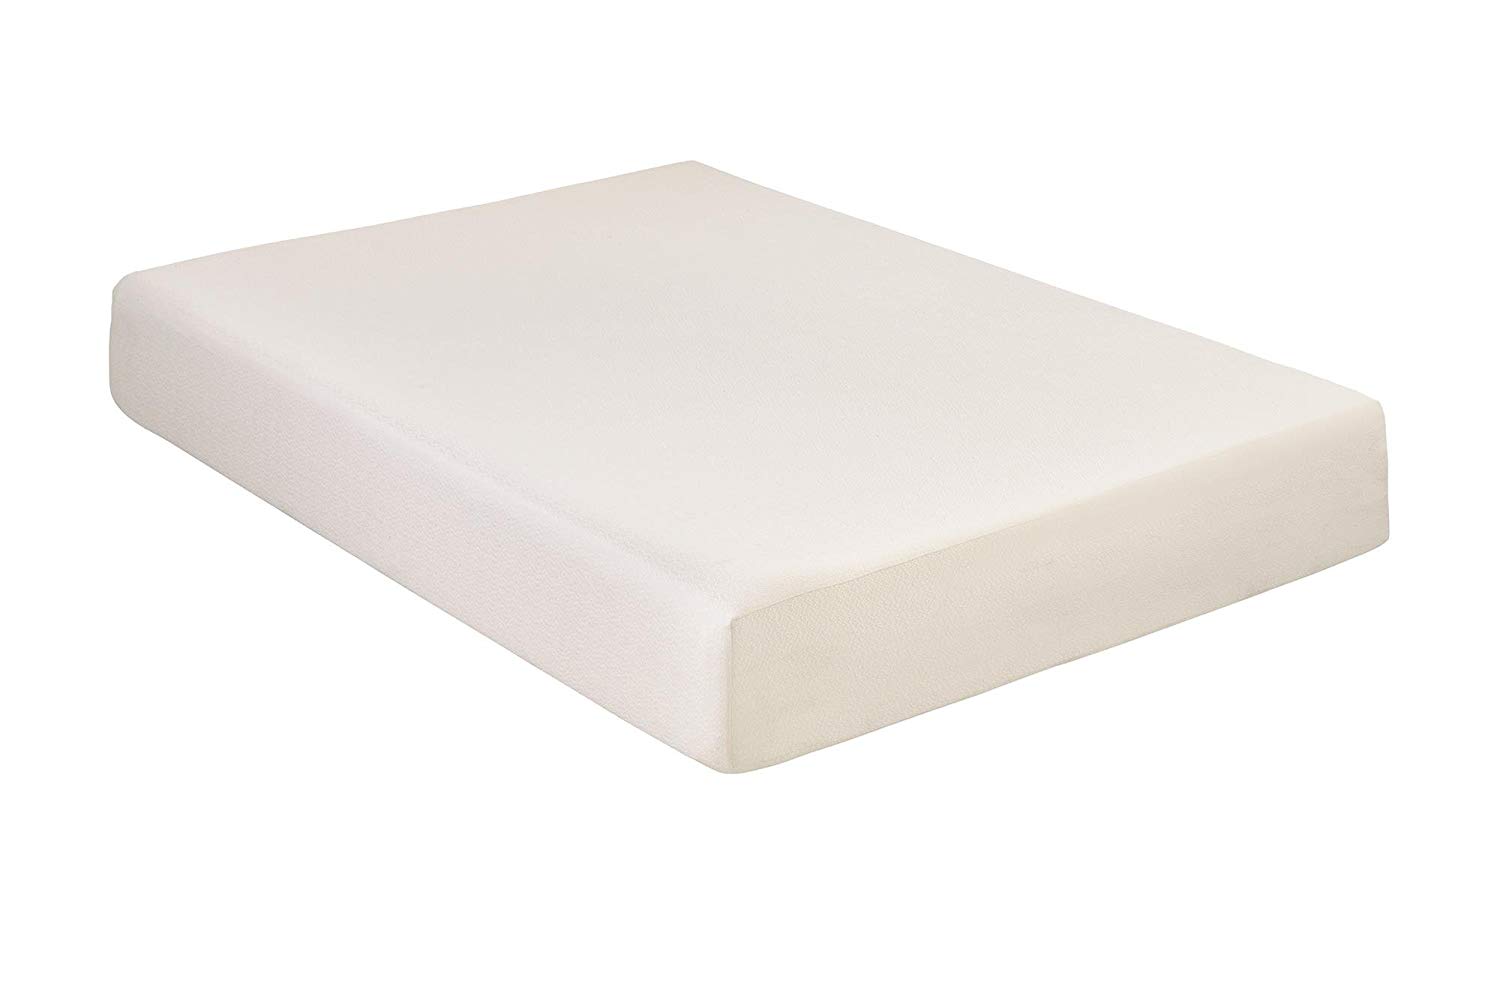 Signature Sleep Memoir 12 Inch Memory Foam Mattress Review